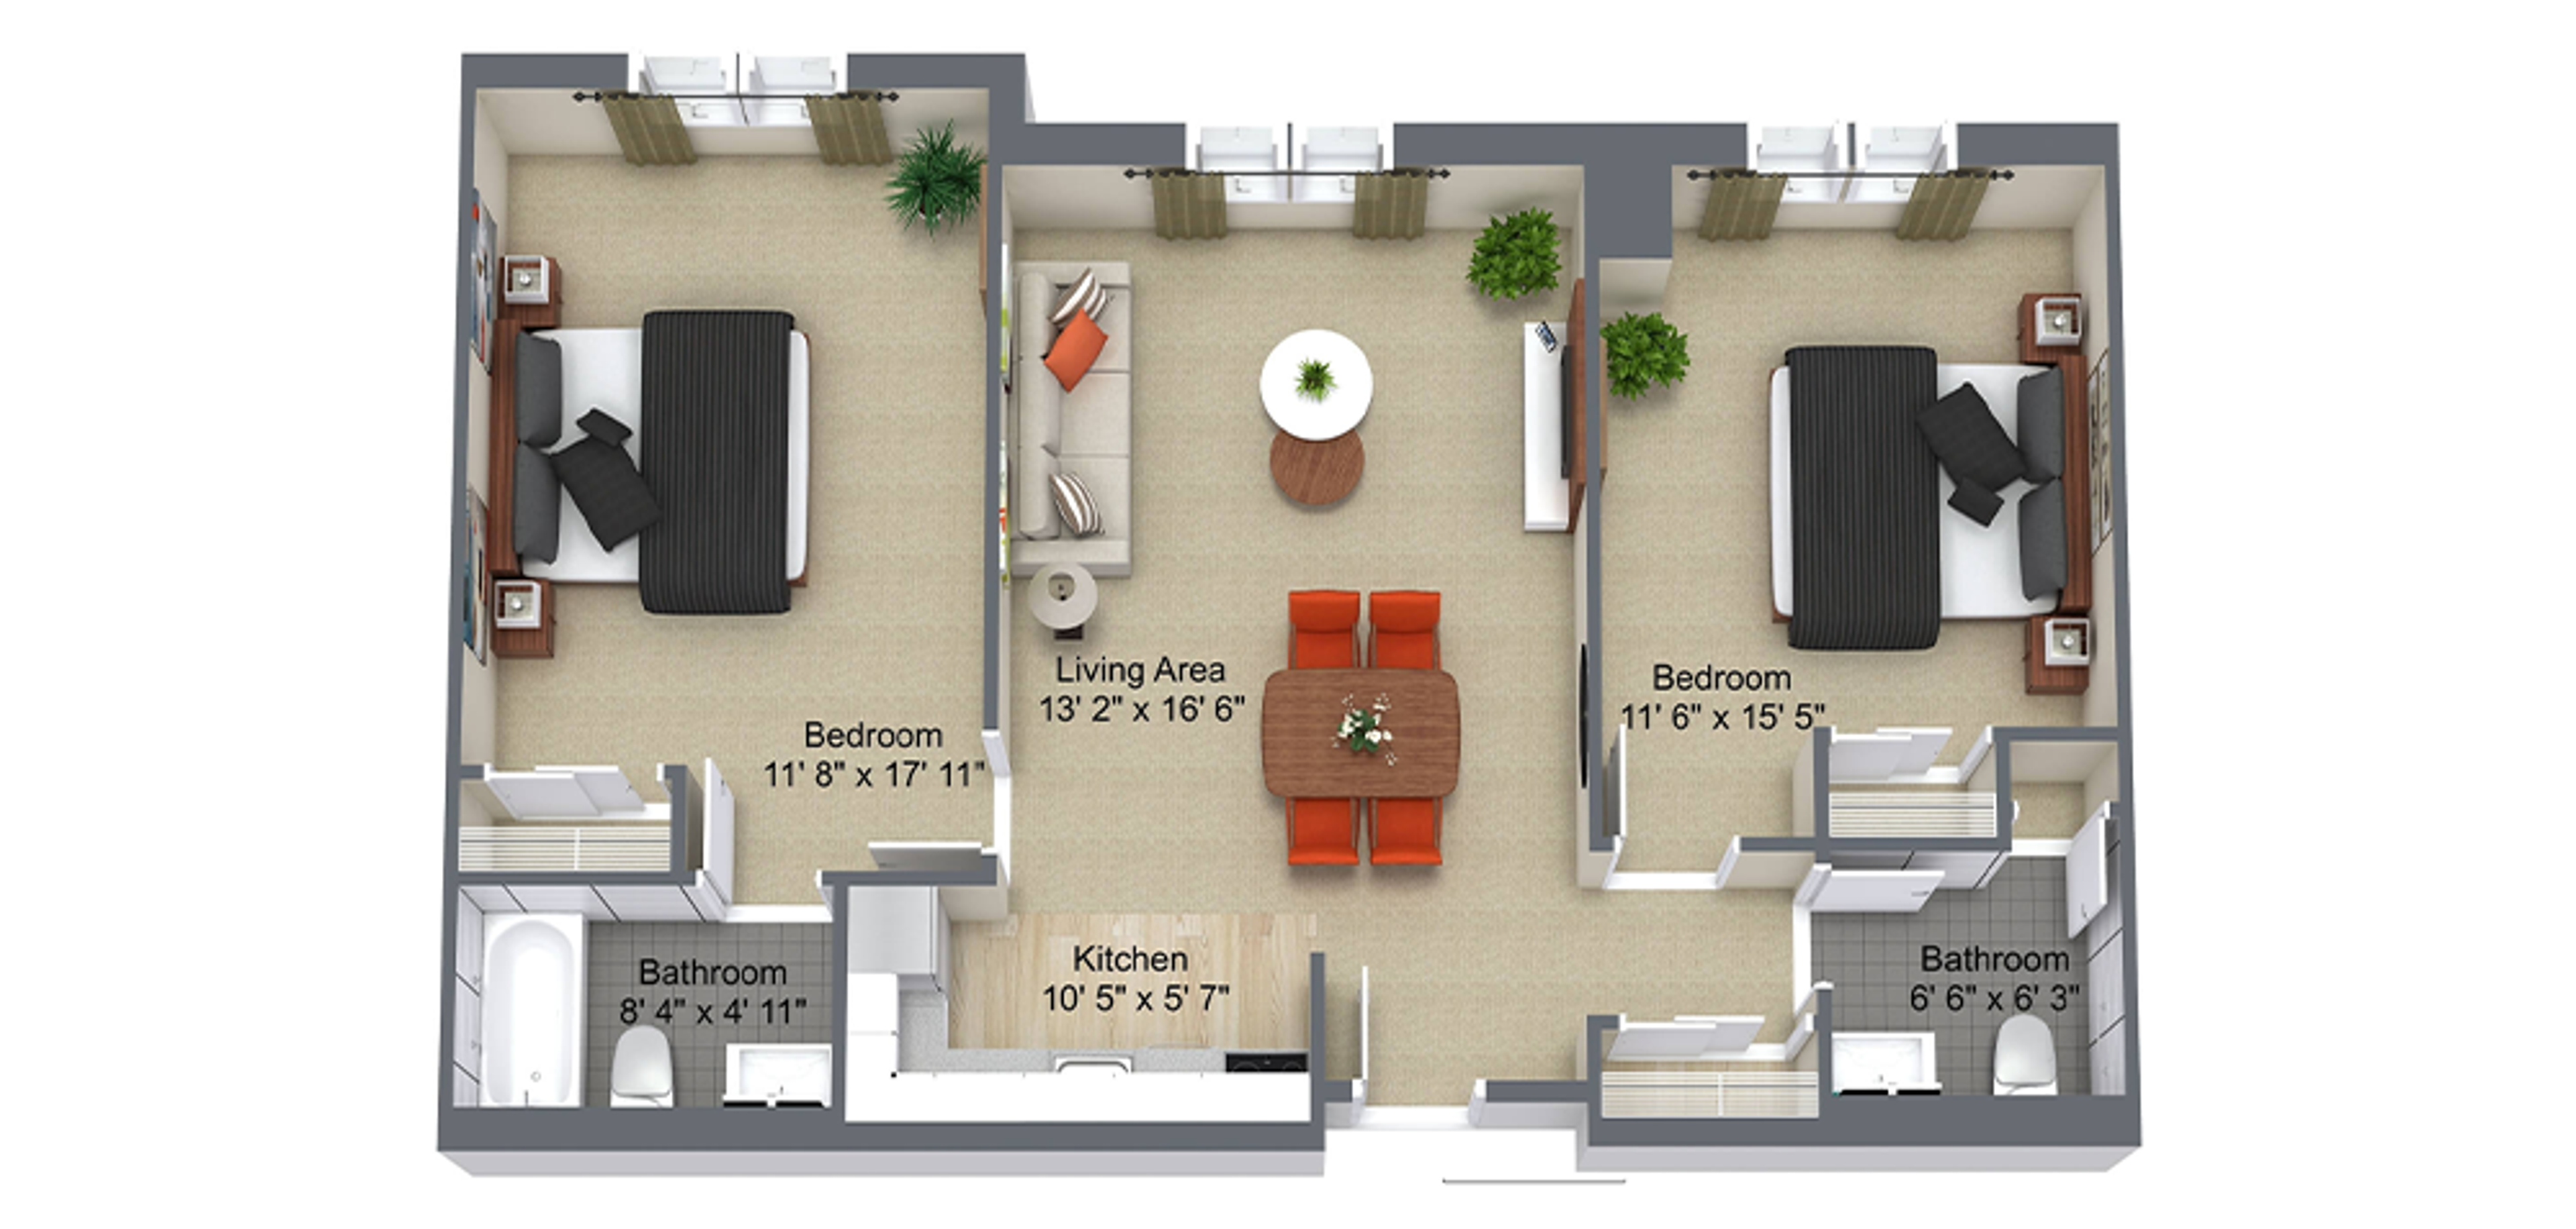 Birkdale Place Sample 2 Bedroom Plan